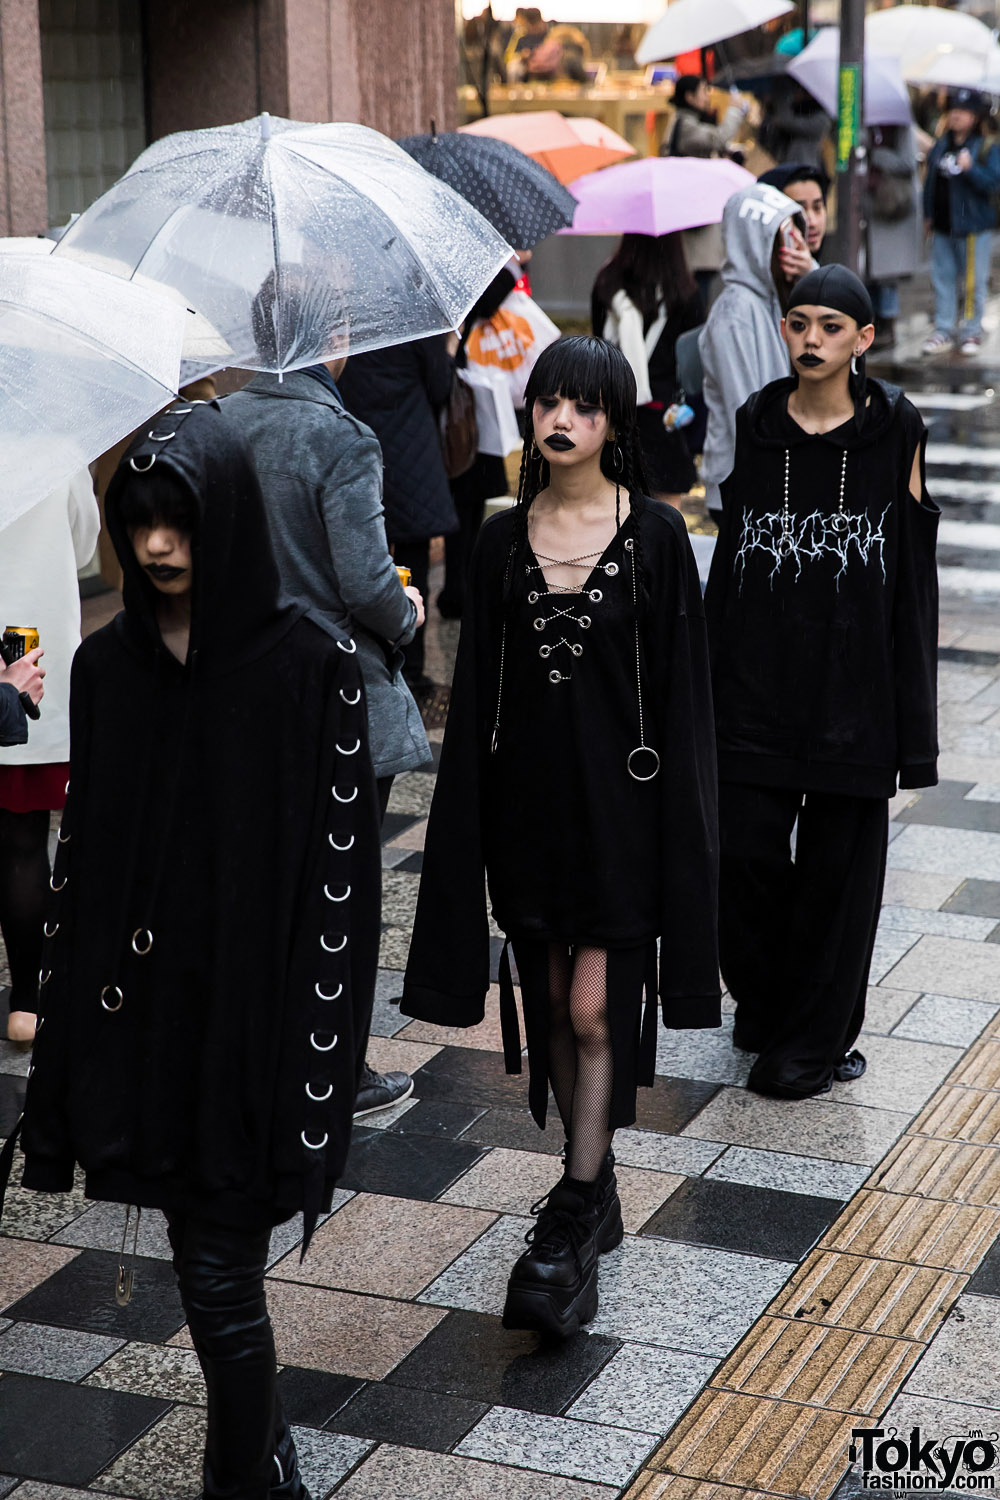 BERCERK “Dirty City” Japanese Fashion Brand’s Dark